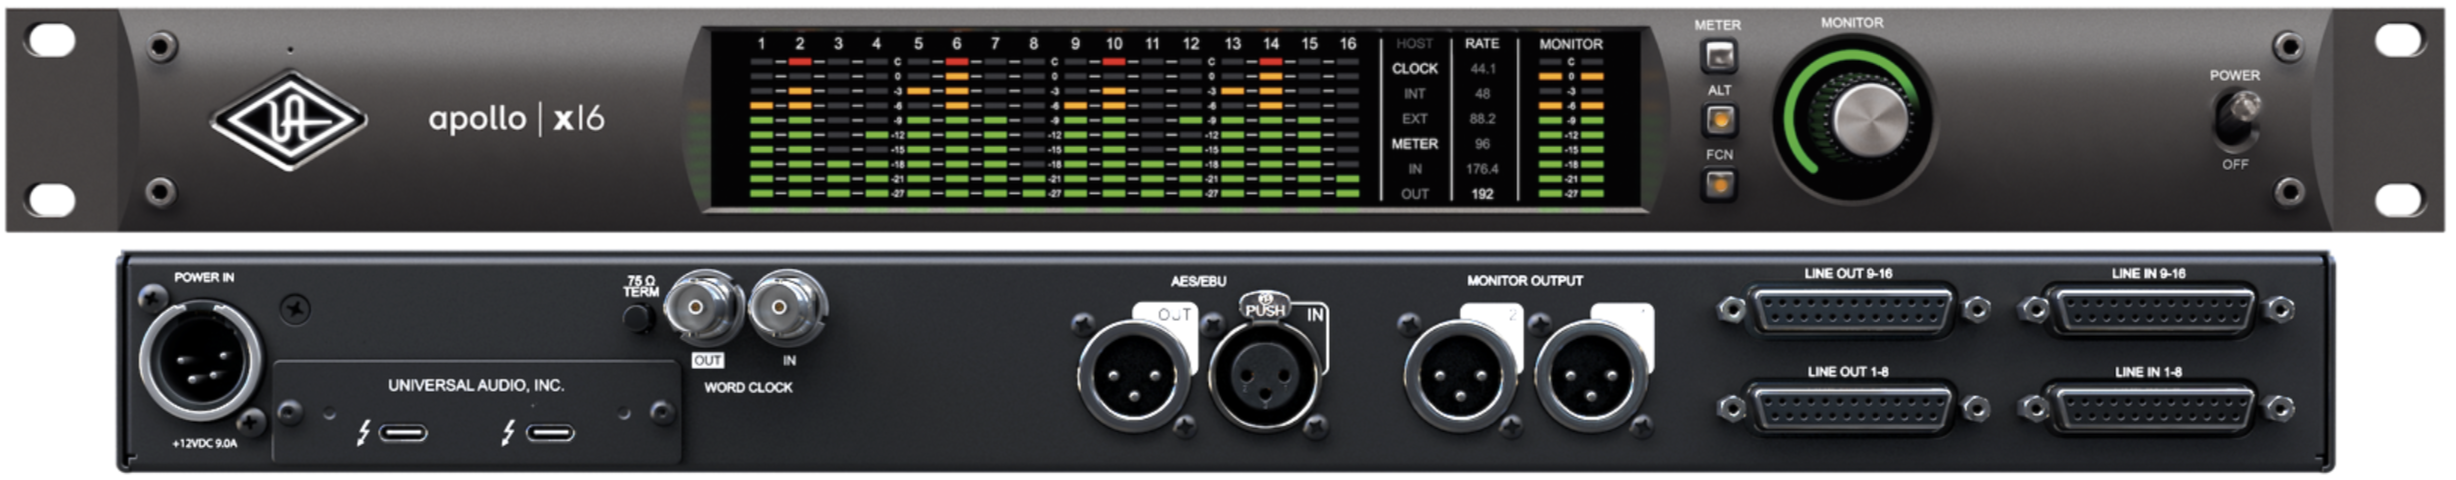 Universal Audio Apollo X16 - Interface de audio thunderbolt - Variation 4